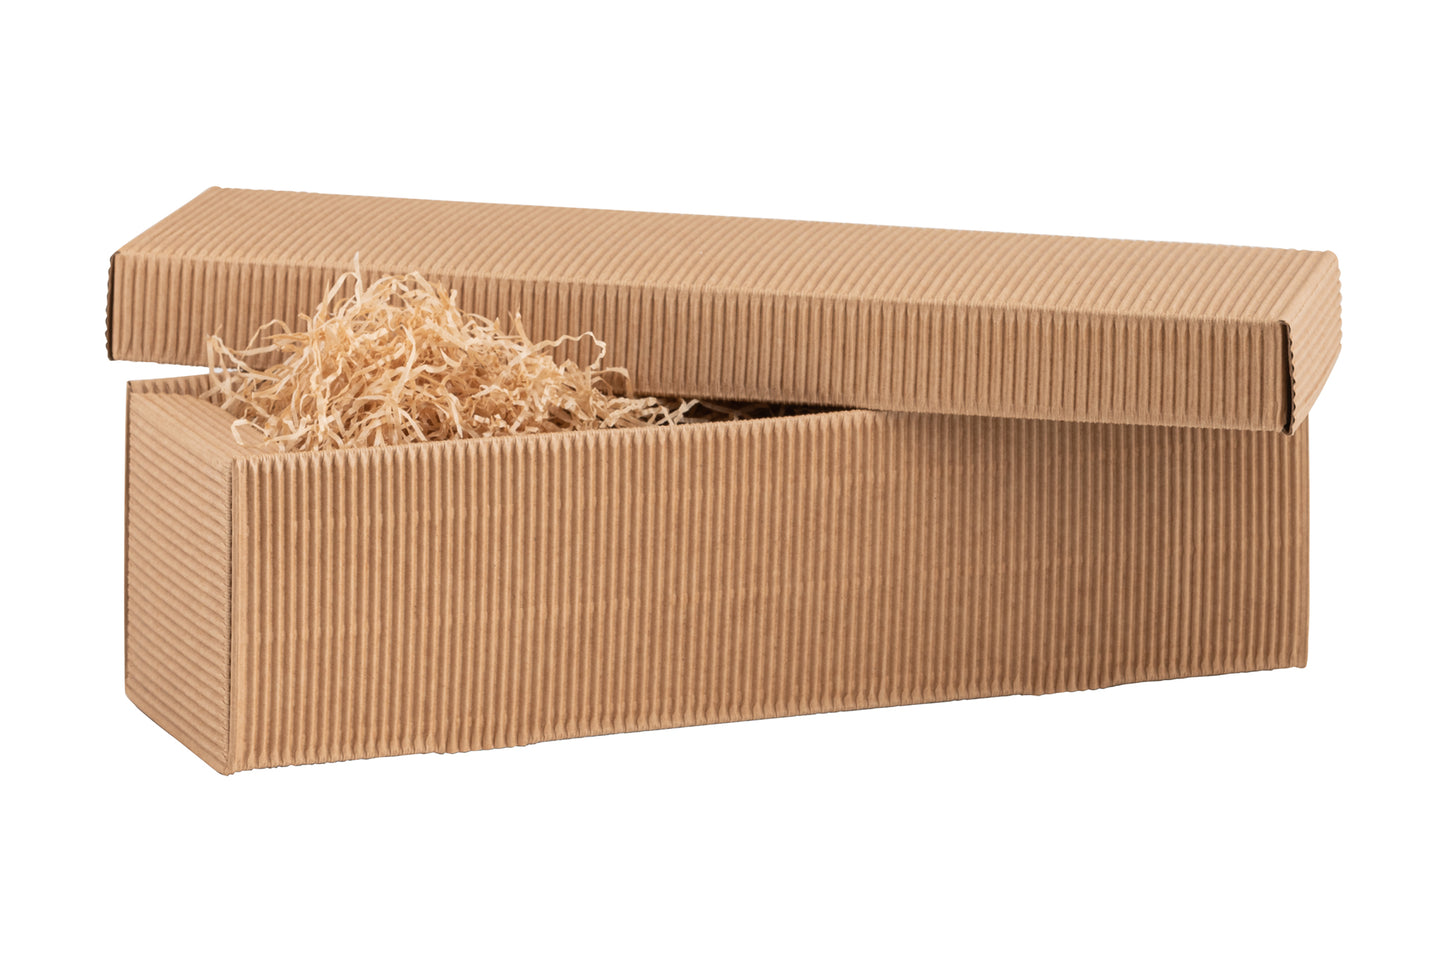 Roddi – Truffle Gift Box